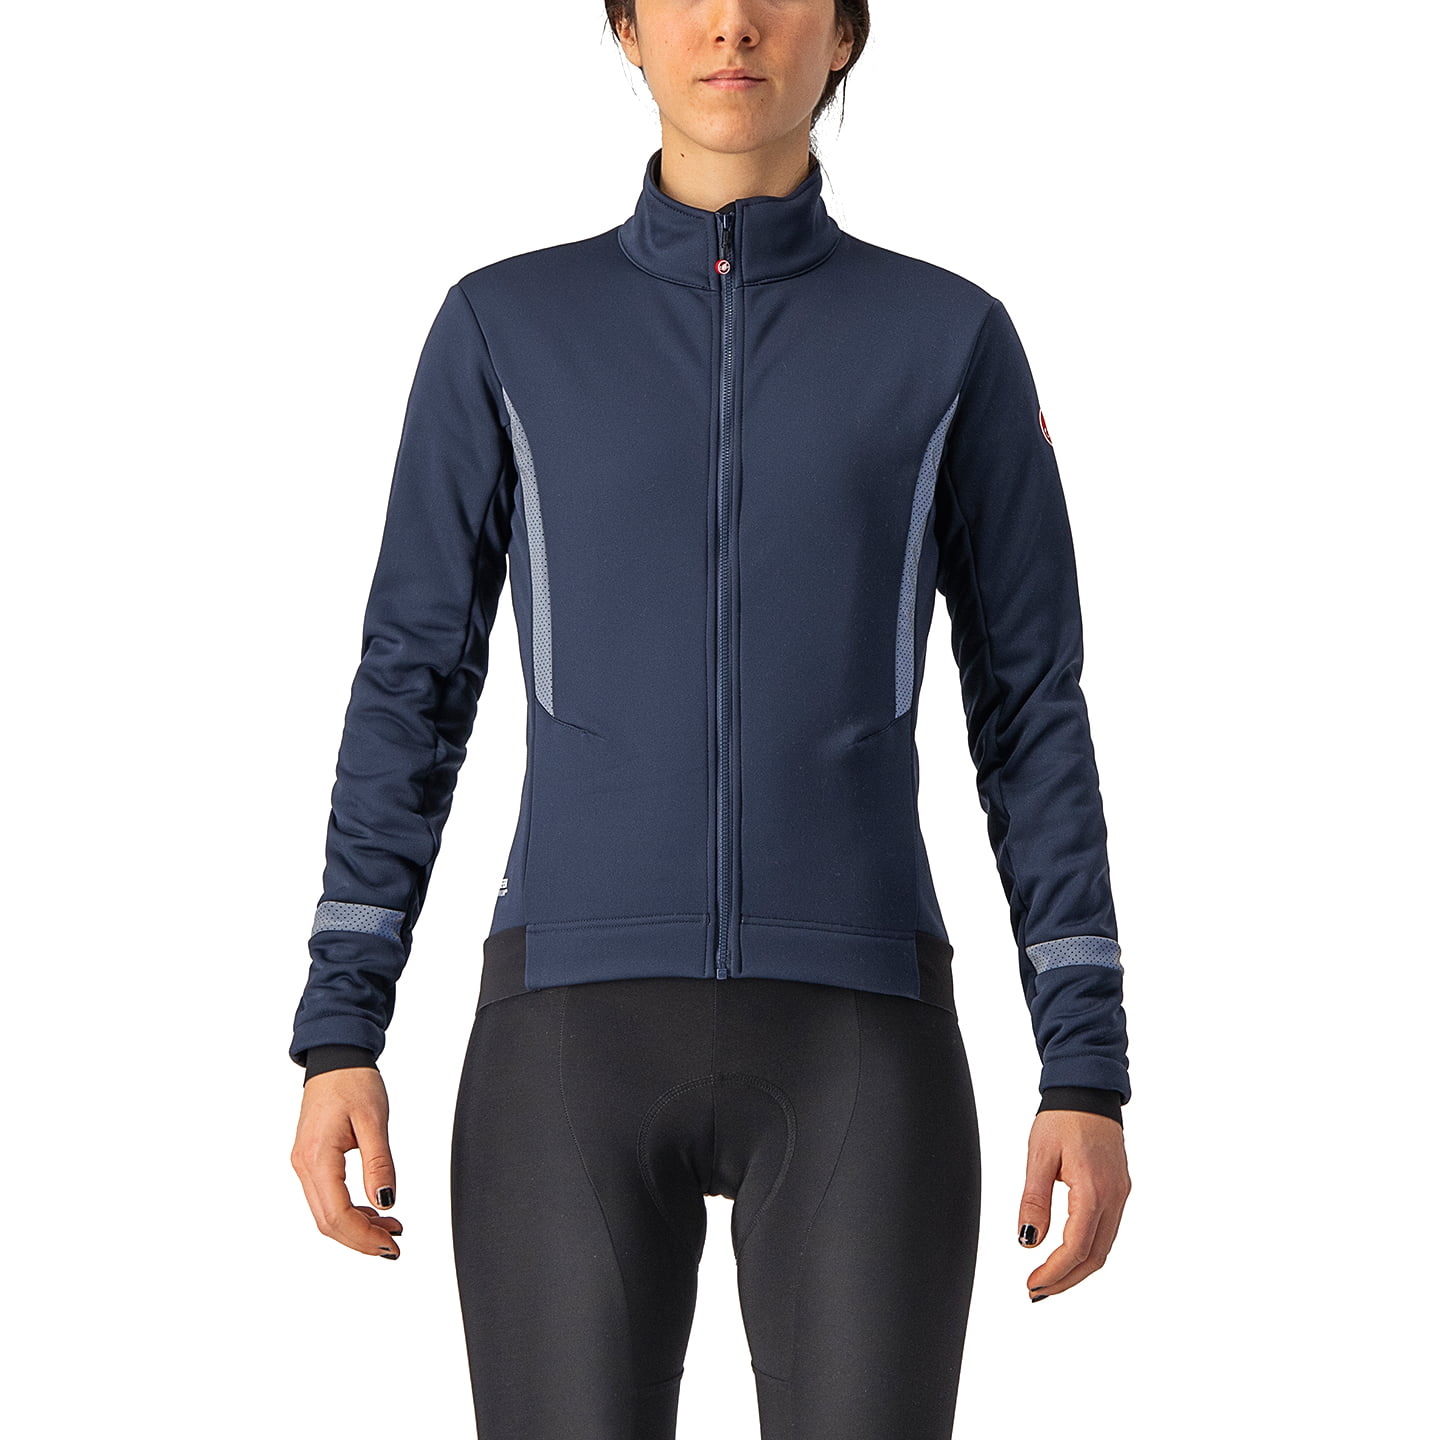 CASTELLI Dinamica 2 Women’s Winter Jacket Women’s Thermal Jacket, size L, Winter jacket, Cycling clothing